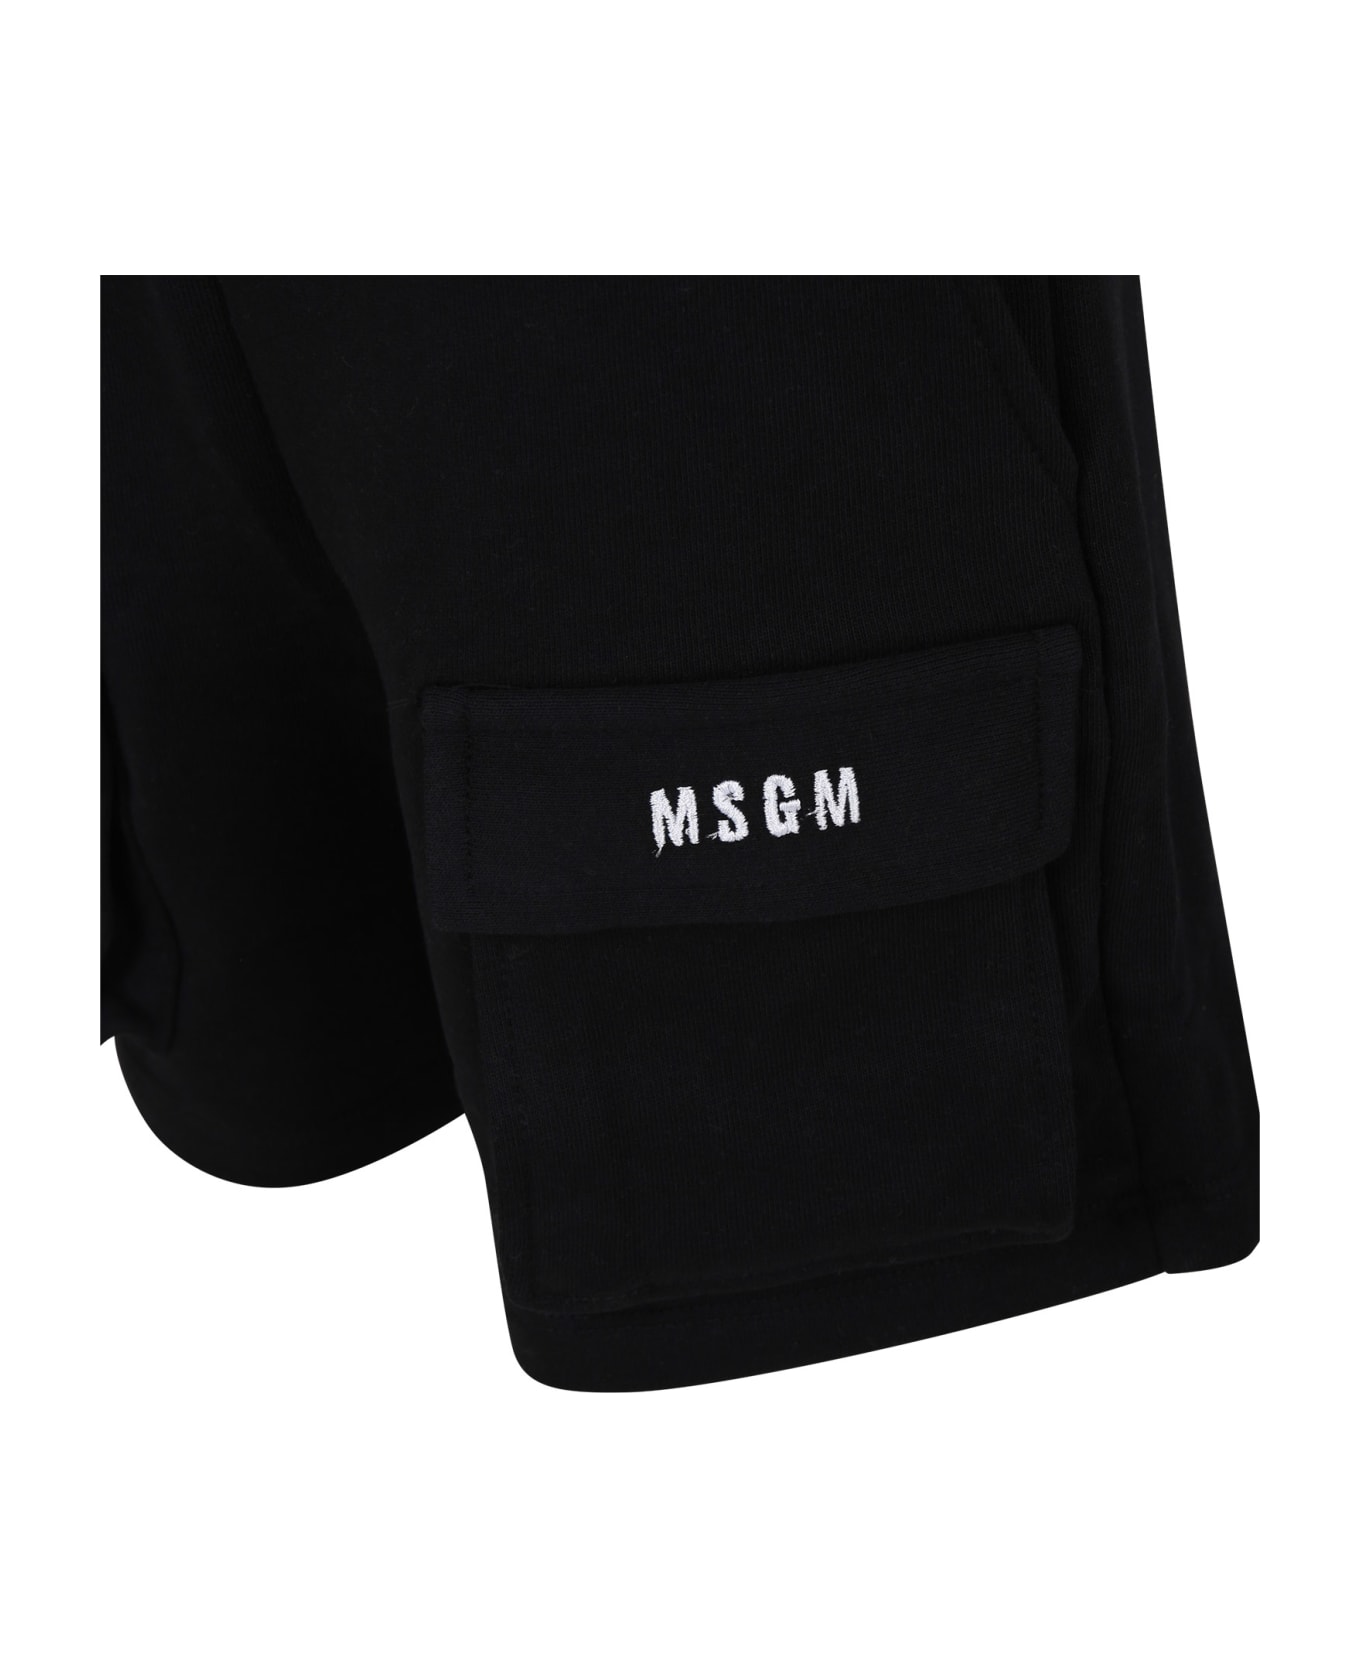 MSGM Black Shorts For Boy With Logo - Black